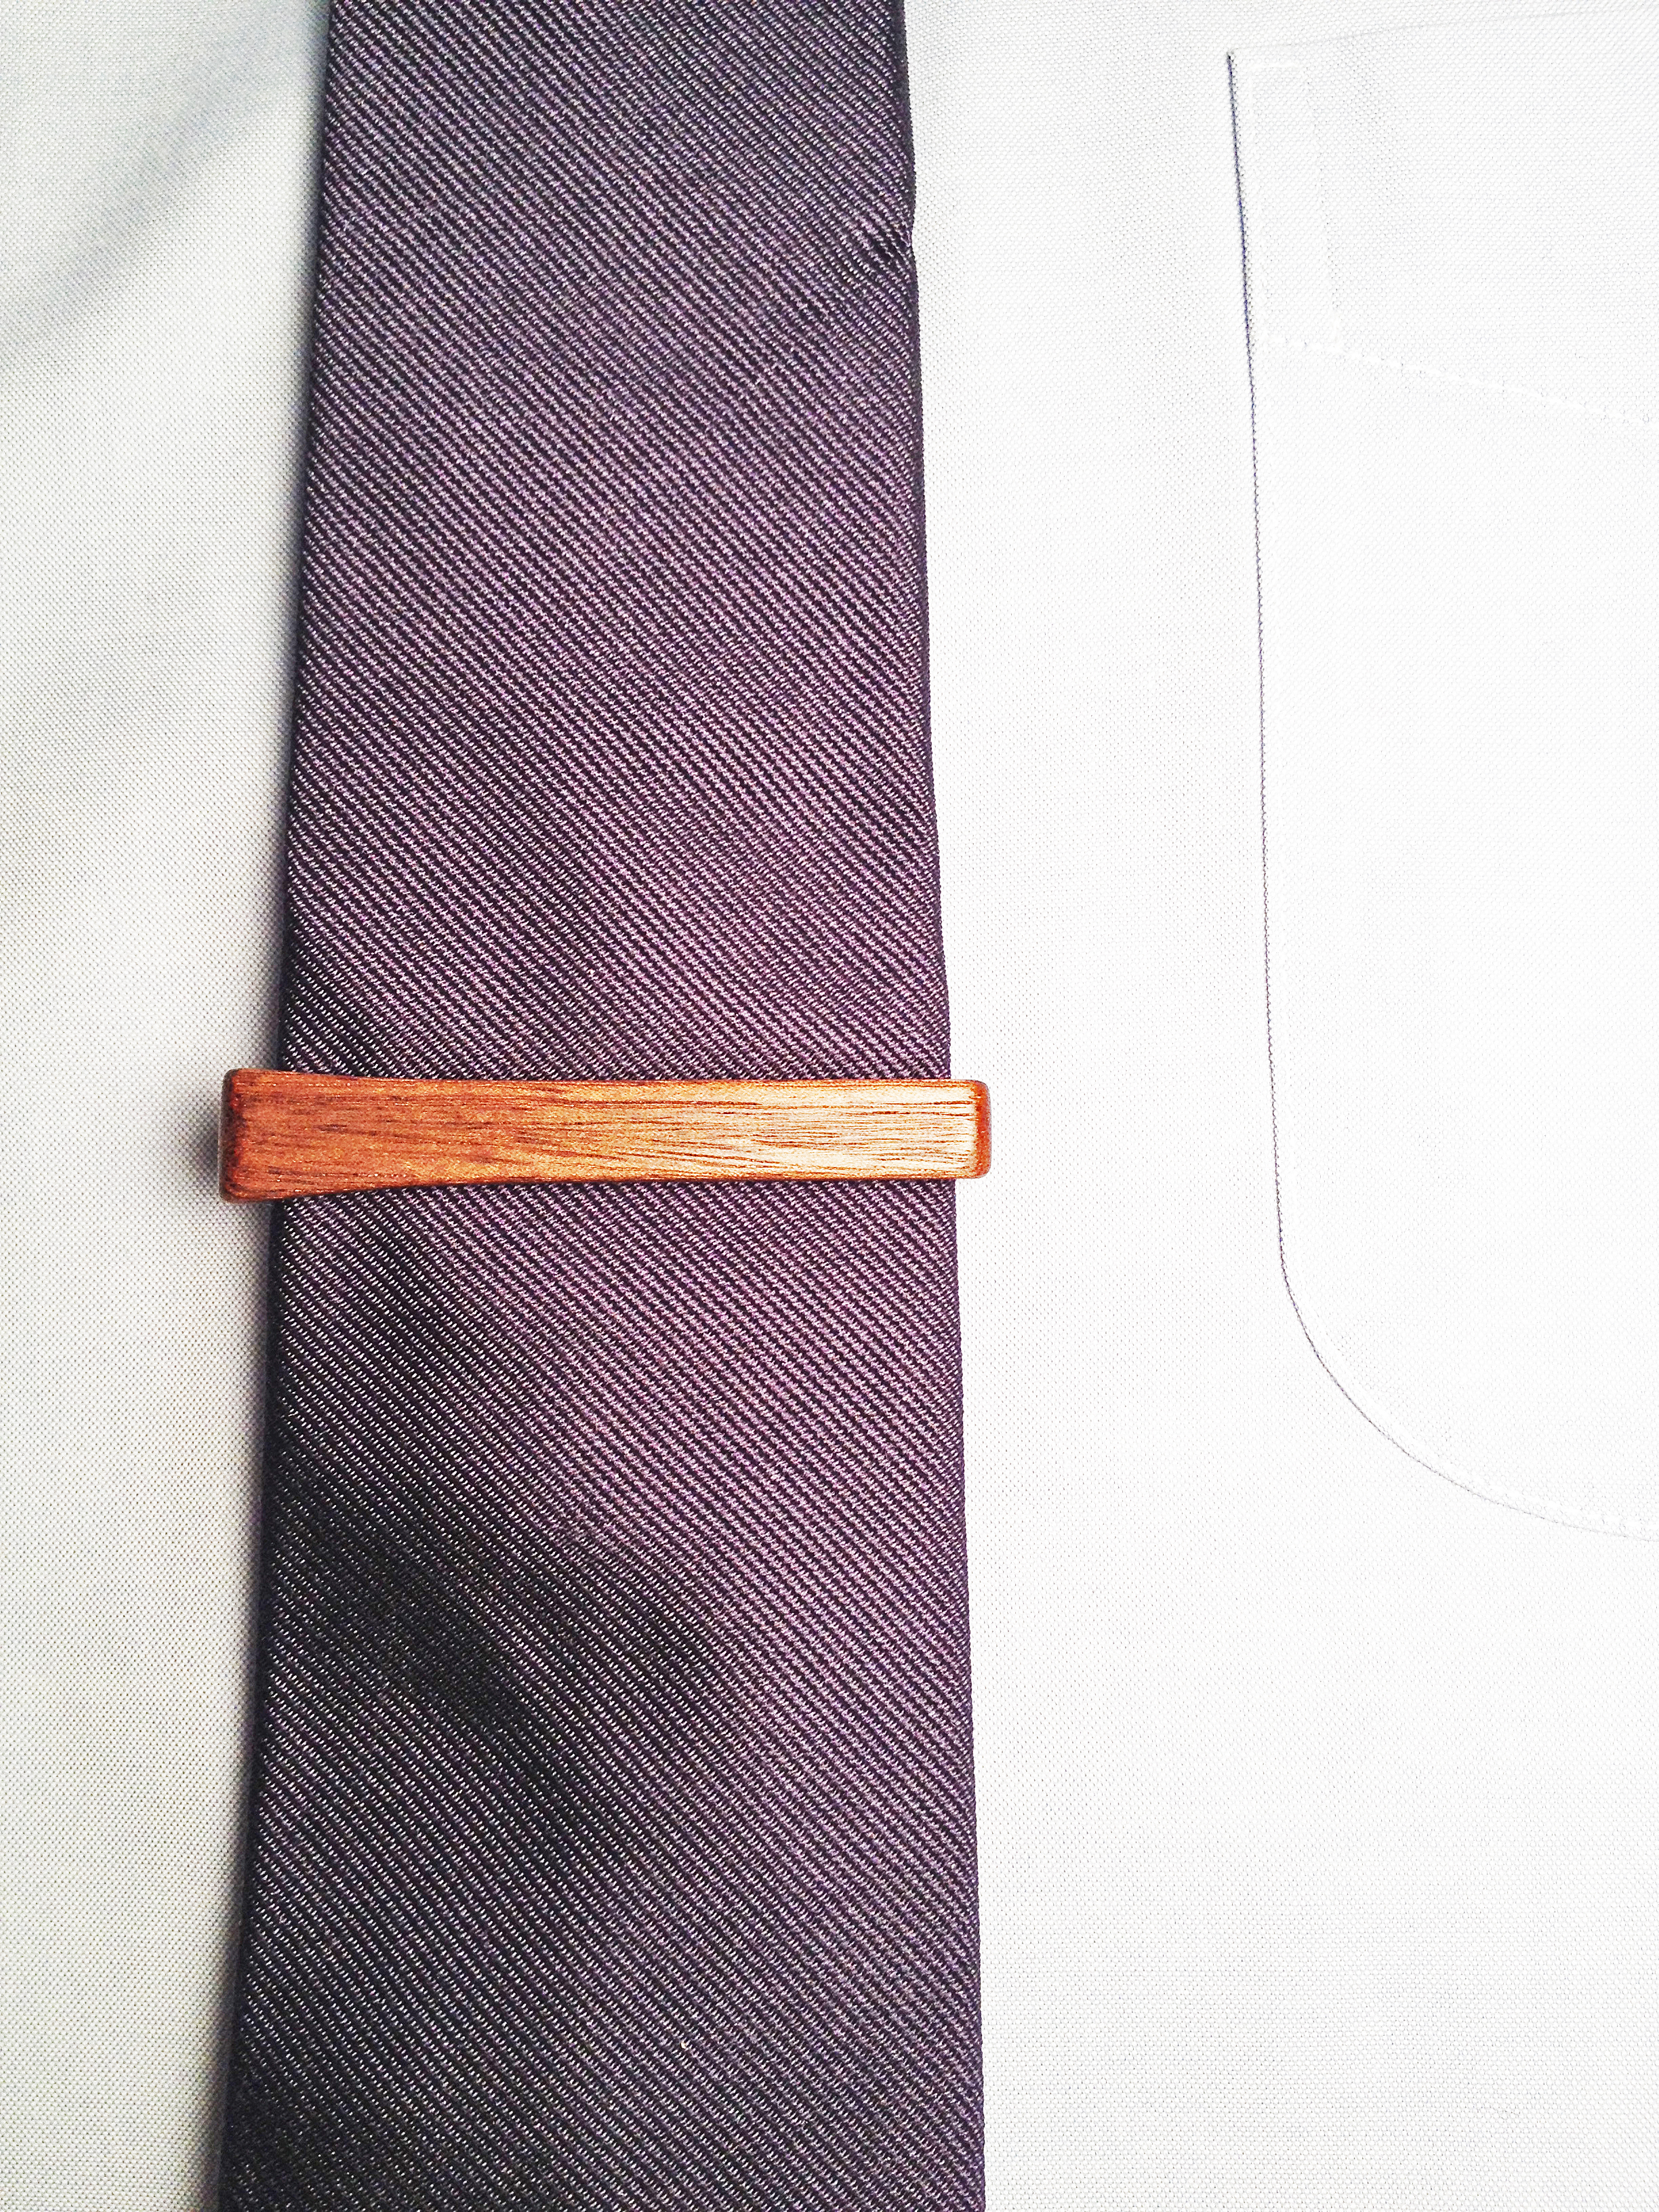 Black Walnut Profiled Tie Bar 1.jpg